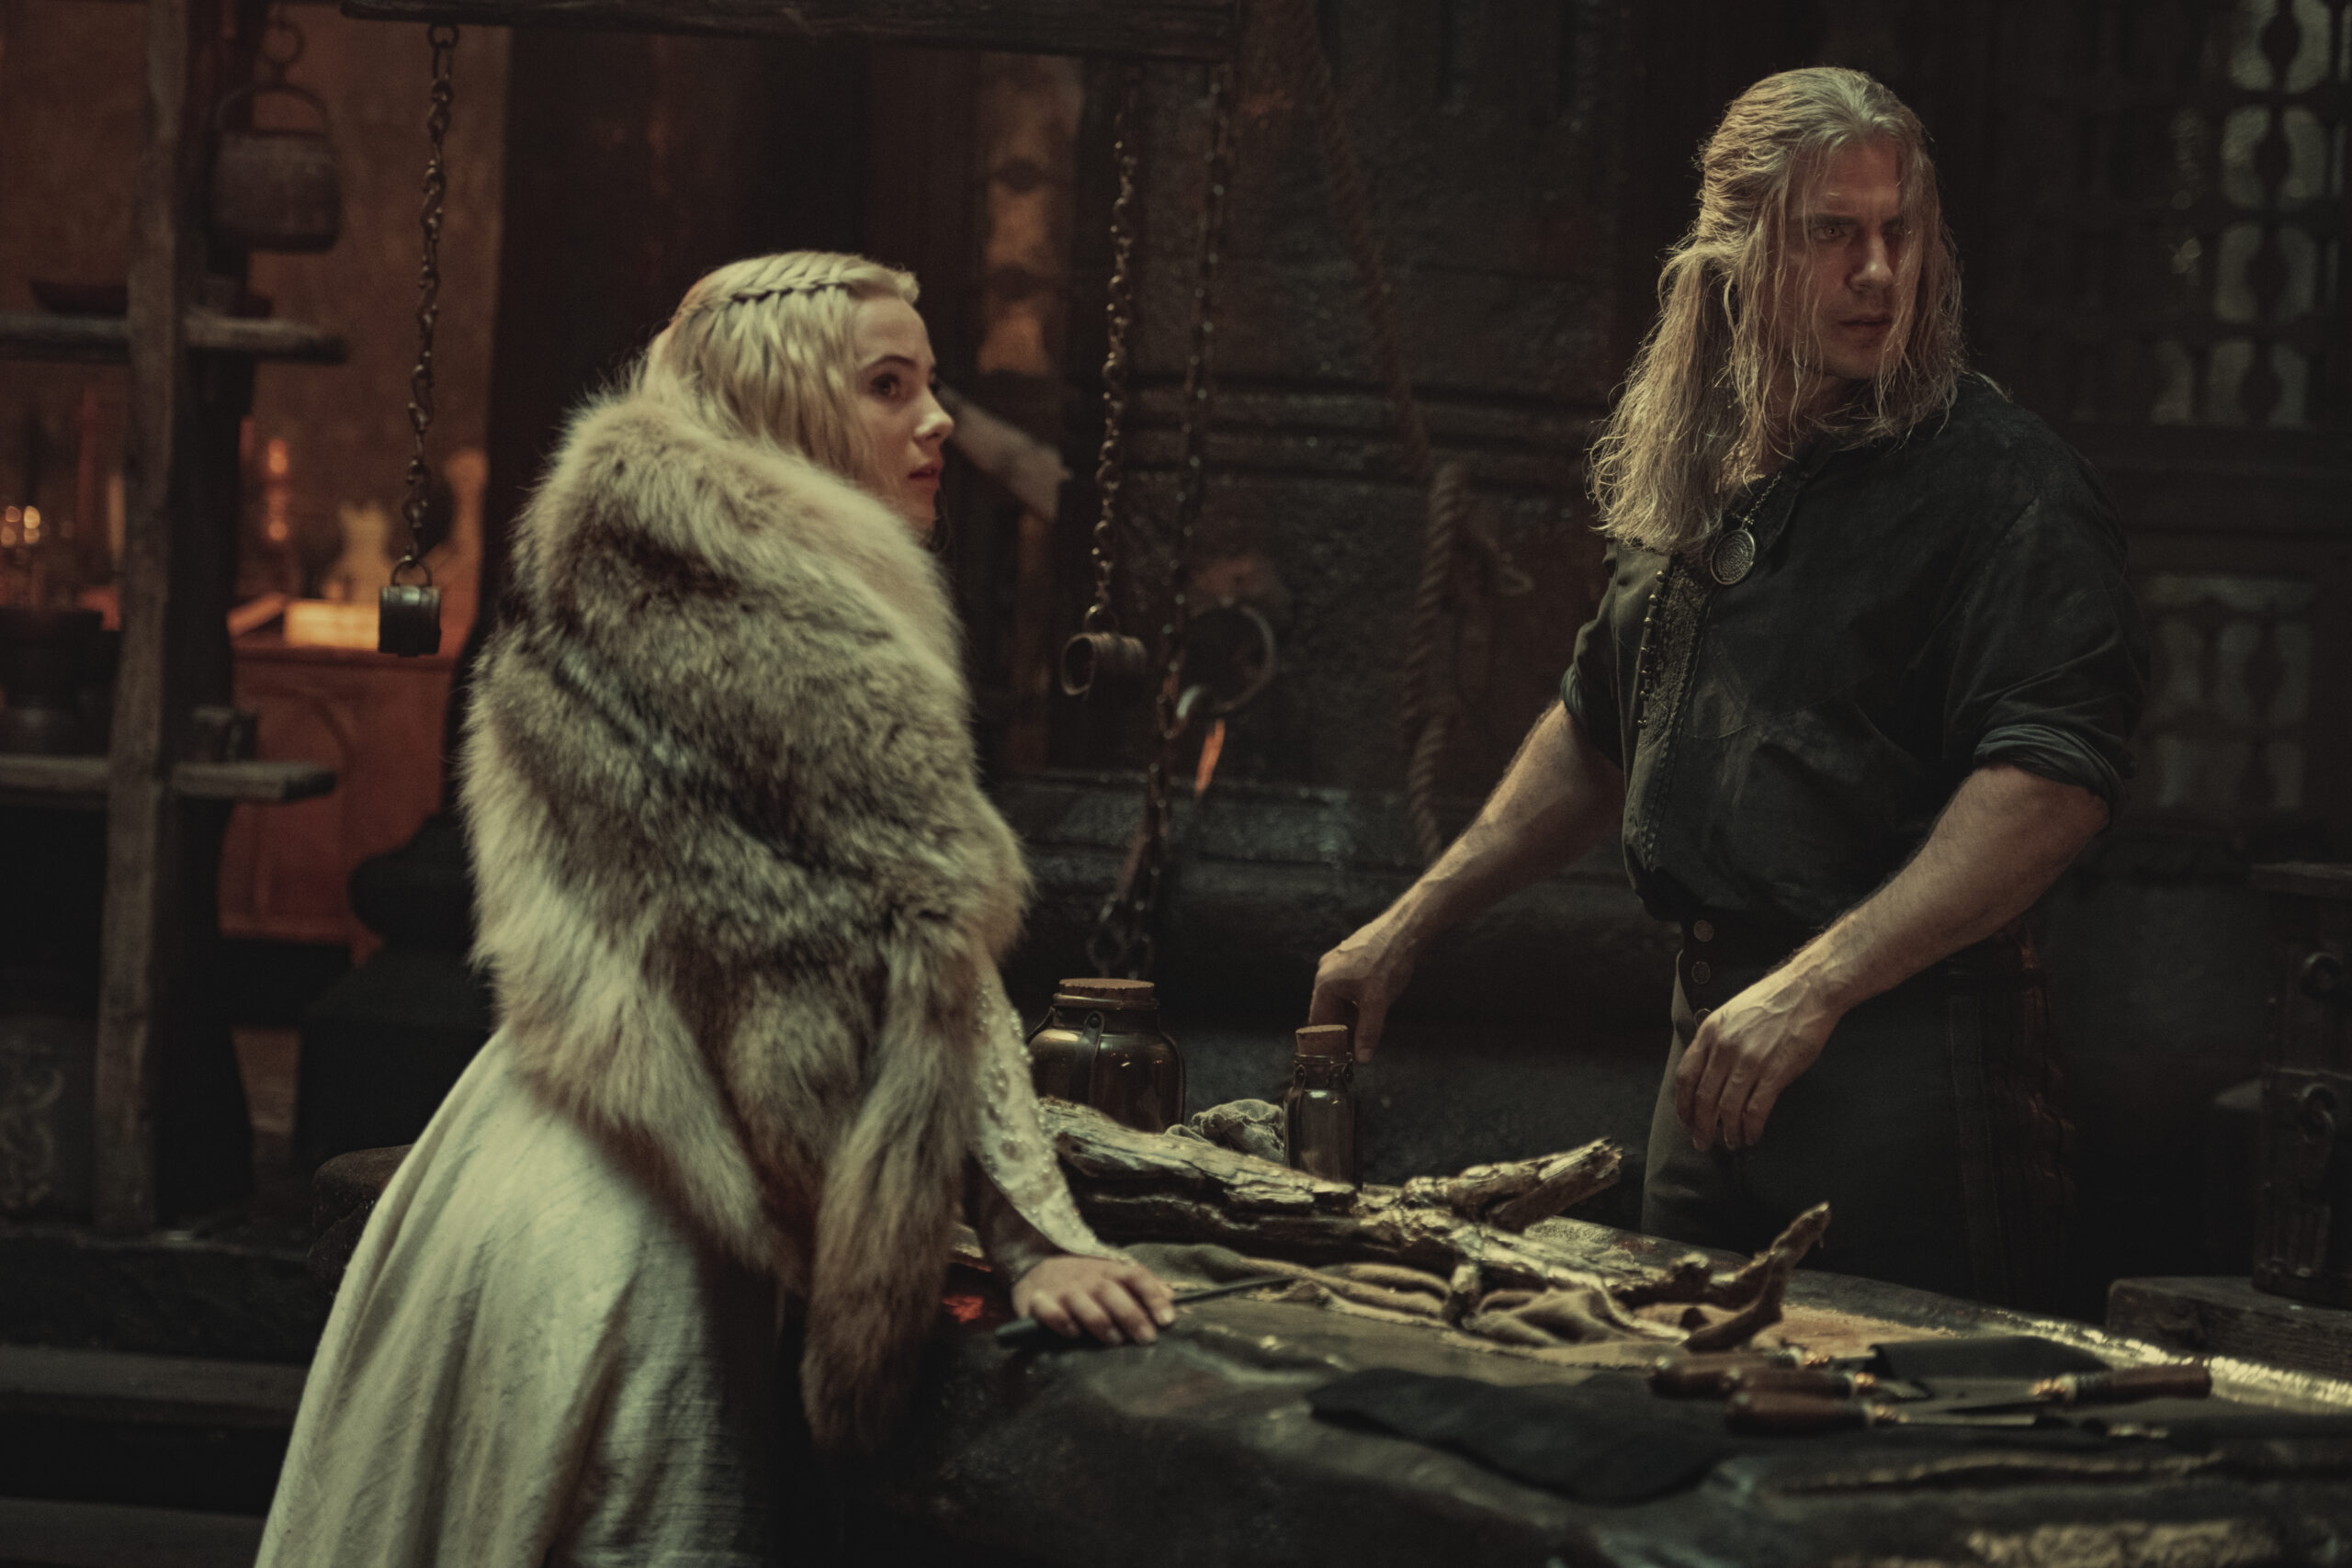 Geralt (Henry Cavill) and Ciri (Ferya Allan) take an inventory of their equipment in The Witcher Season 2 Episode 2 “Kaer Morhen” (2021) via Netflix